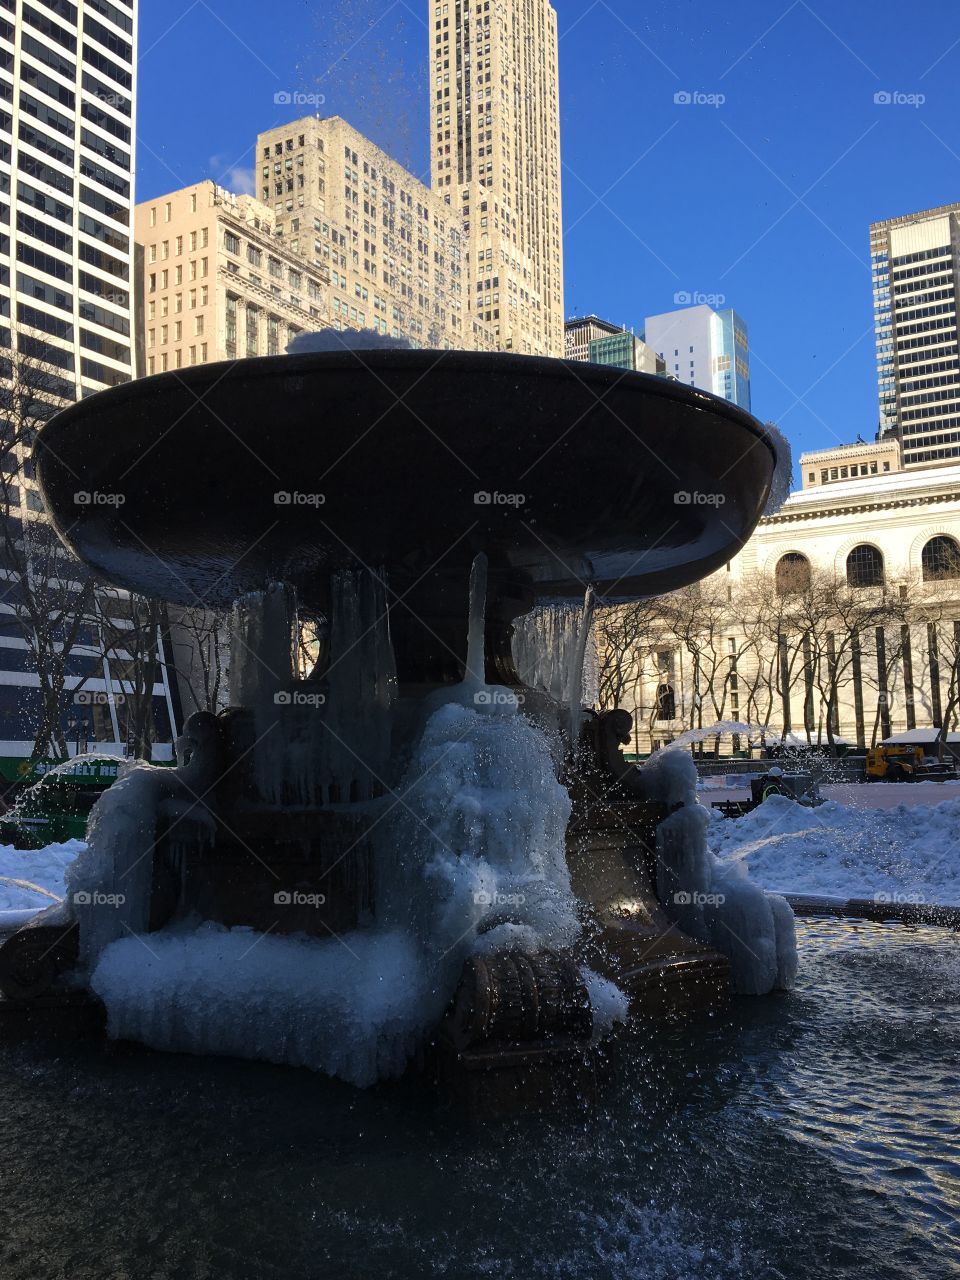 Frozen Fountain 